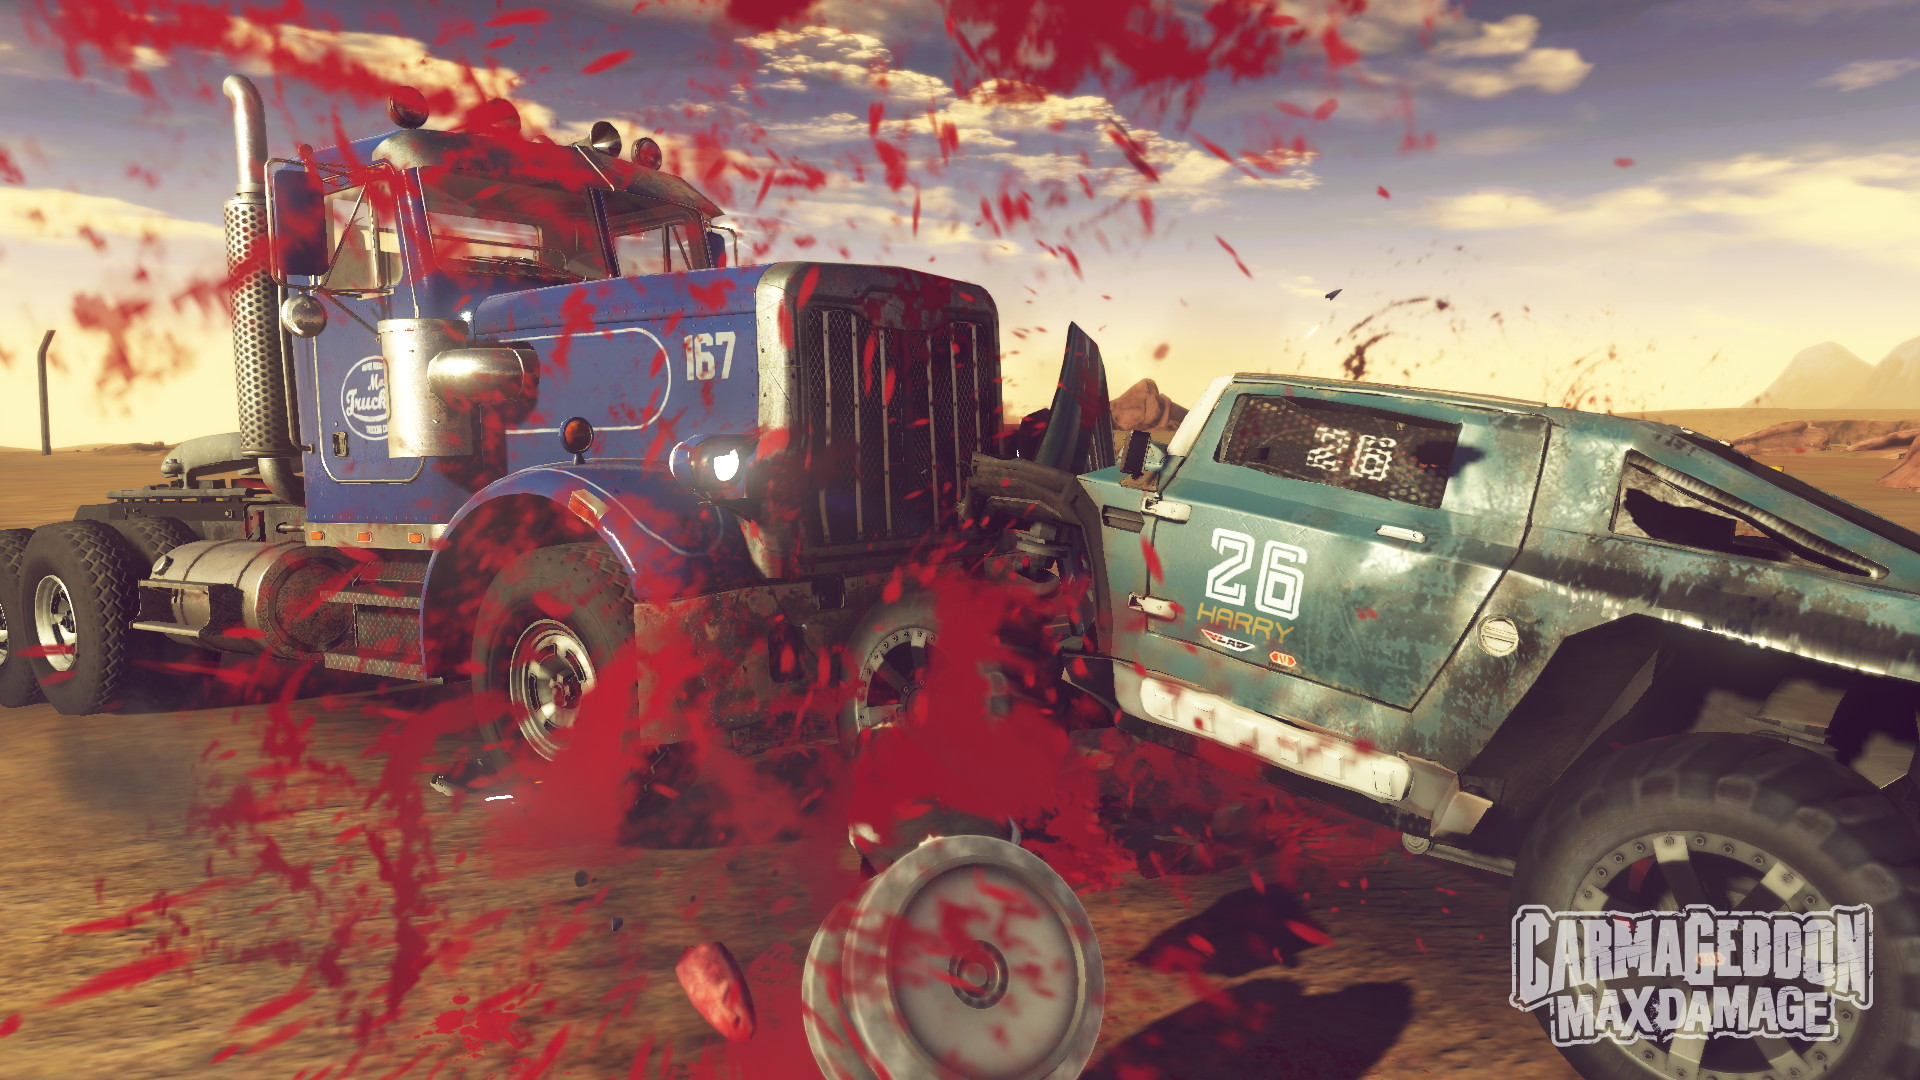 Carmageddon: Max Damage - screenshot 10